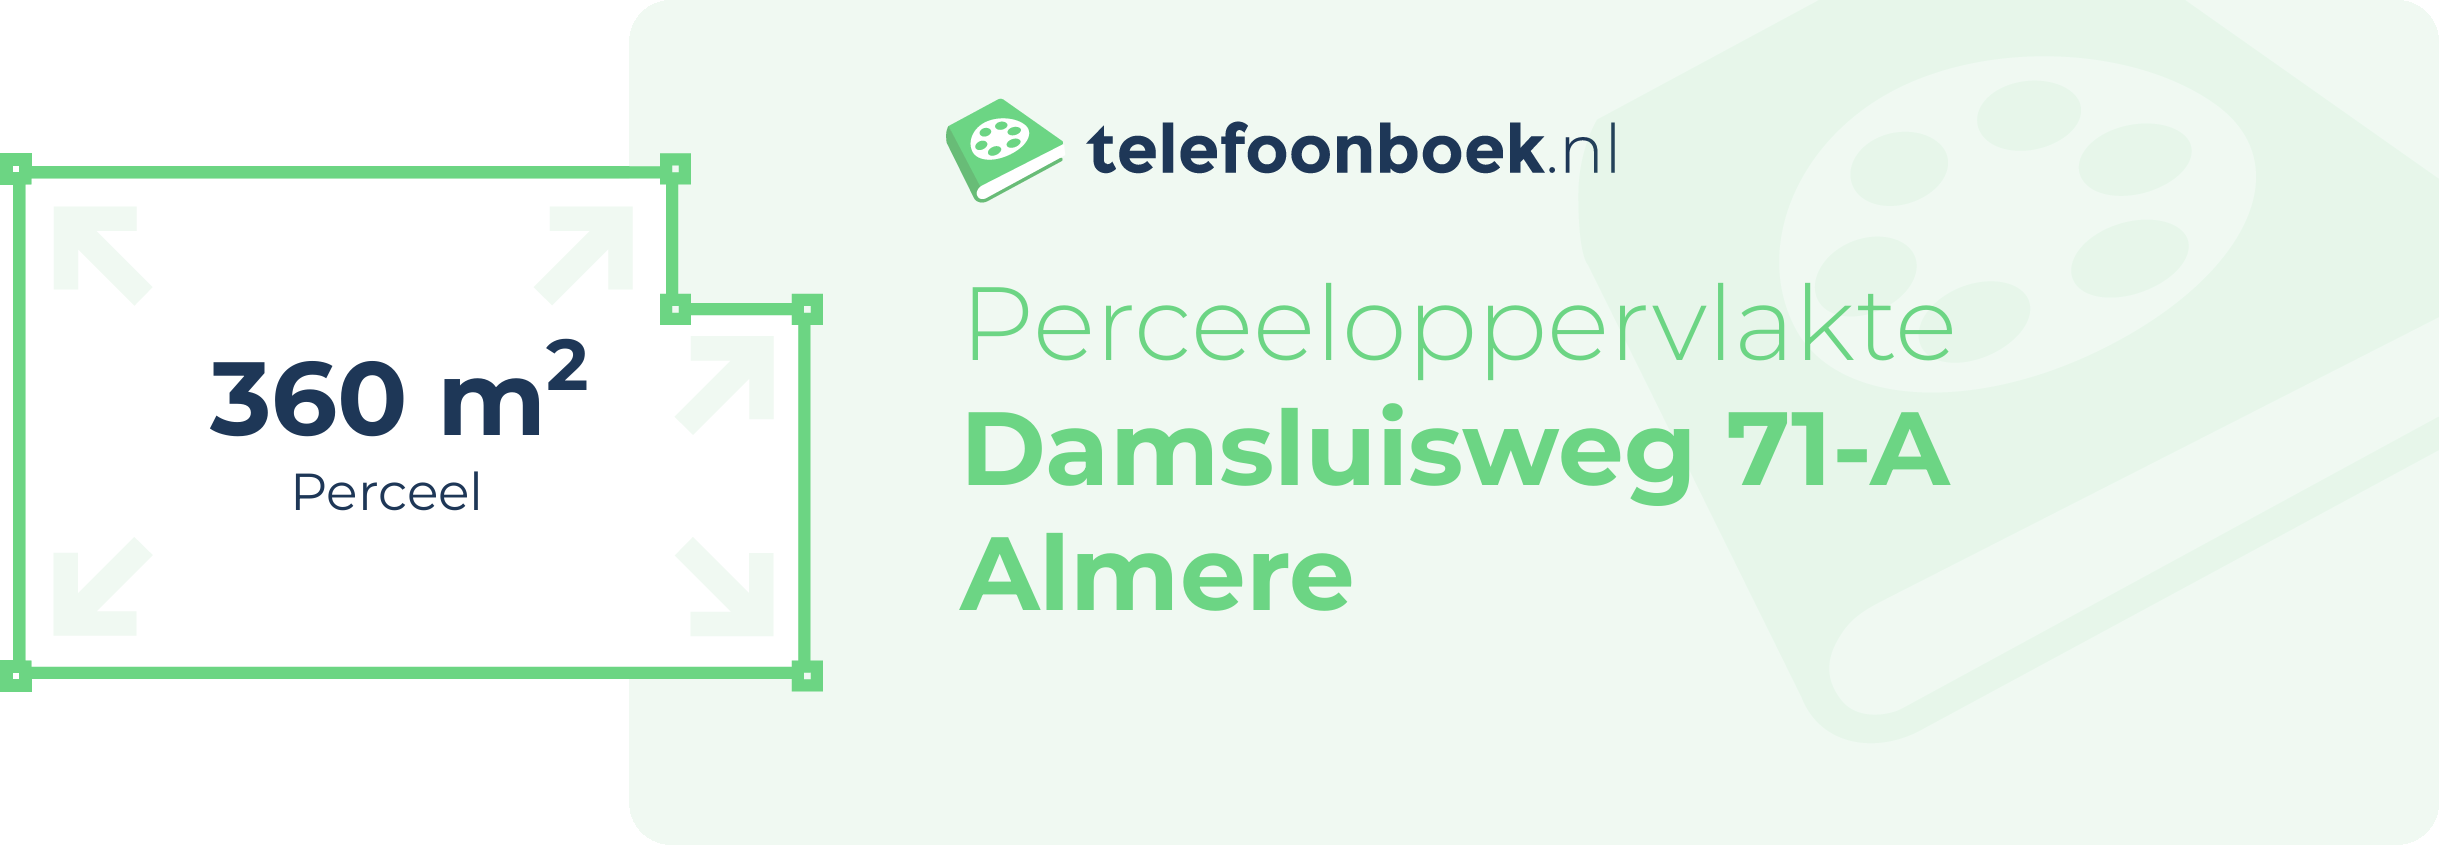 Perceeloppervlakte Damsluisweg 71-A Almere